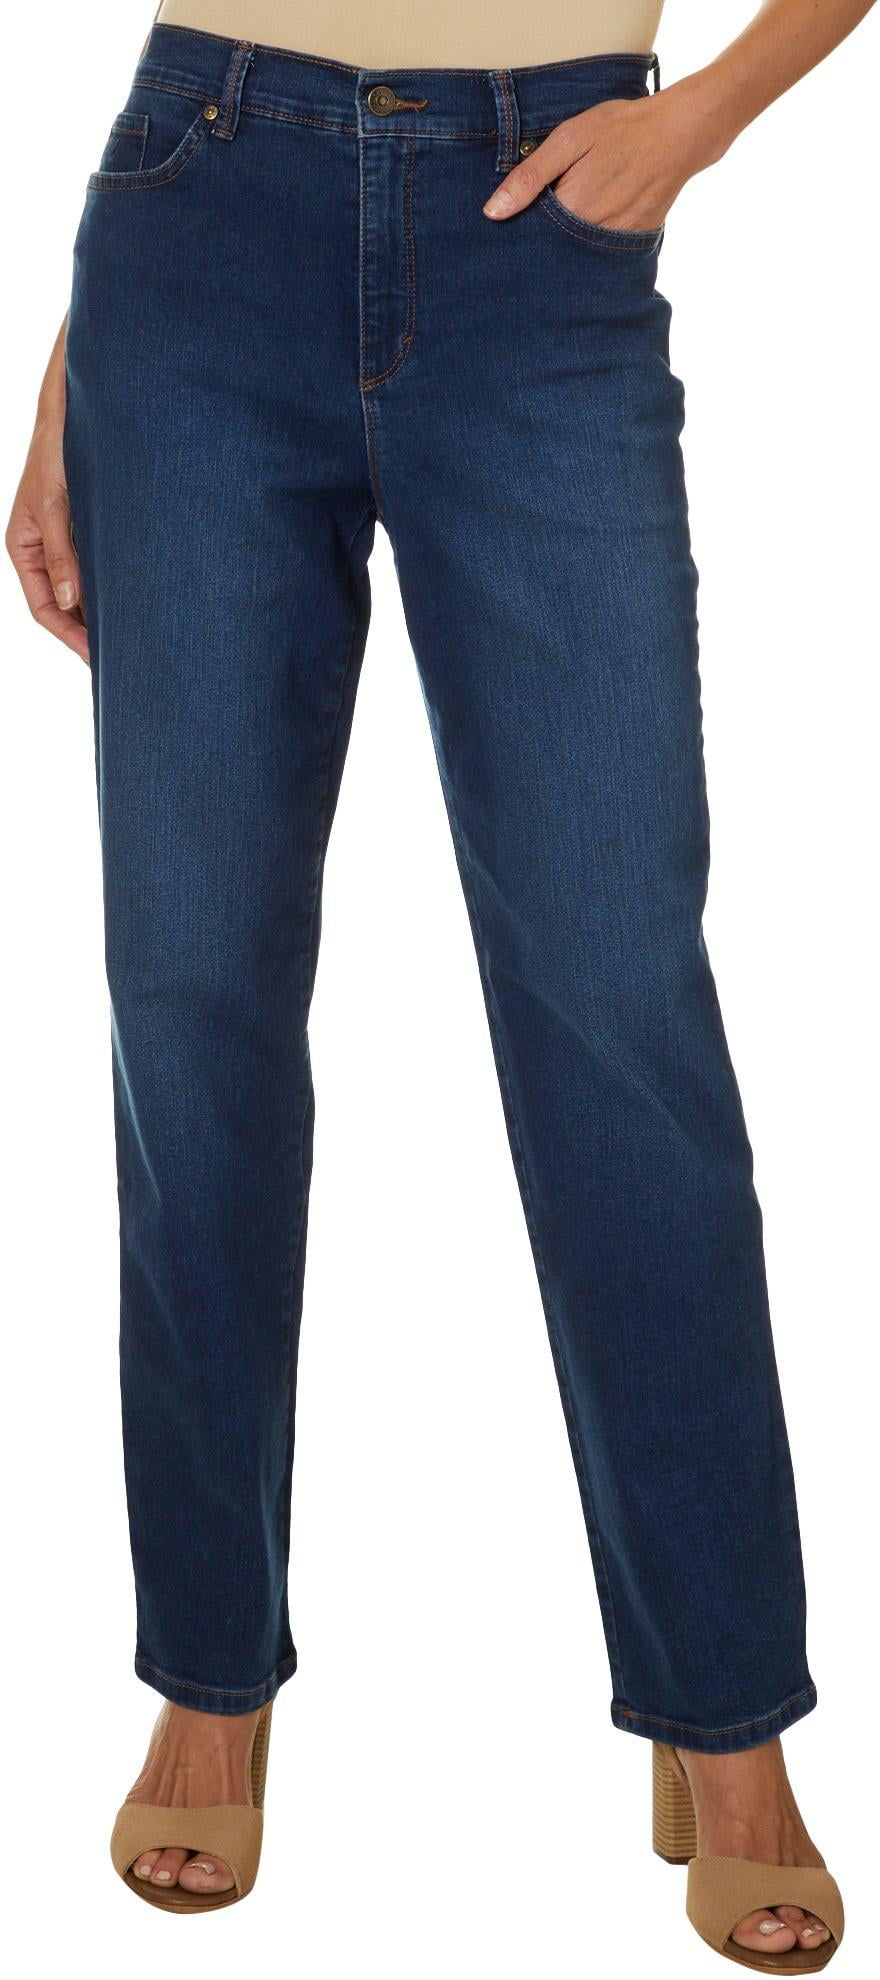 gloria vanderbilt amanda embellished jeans